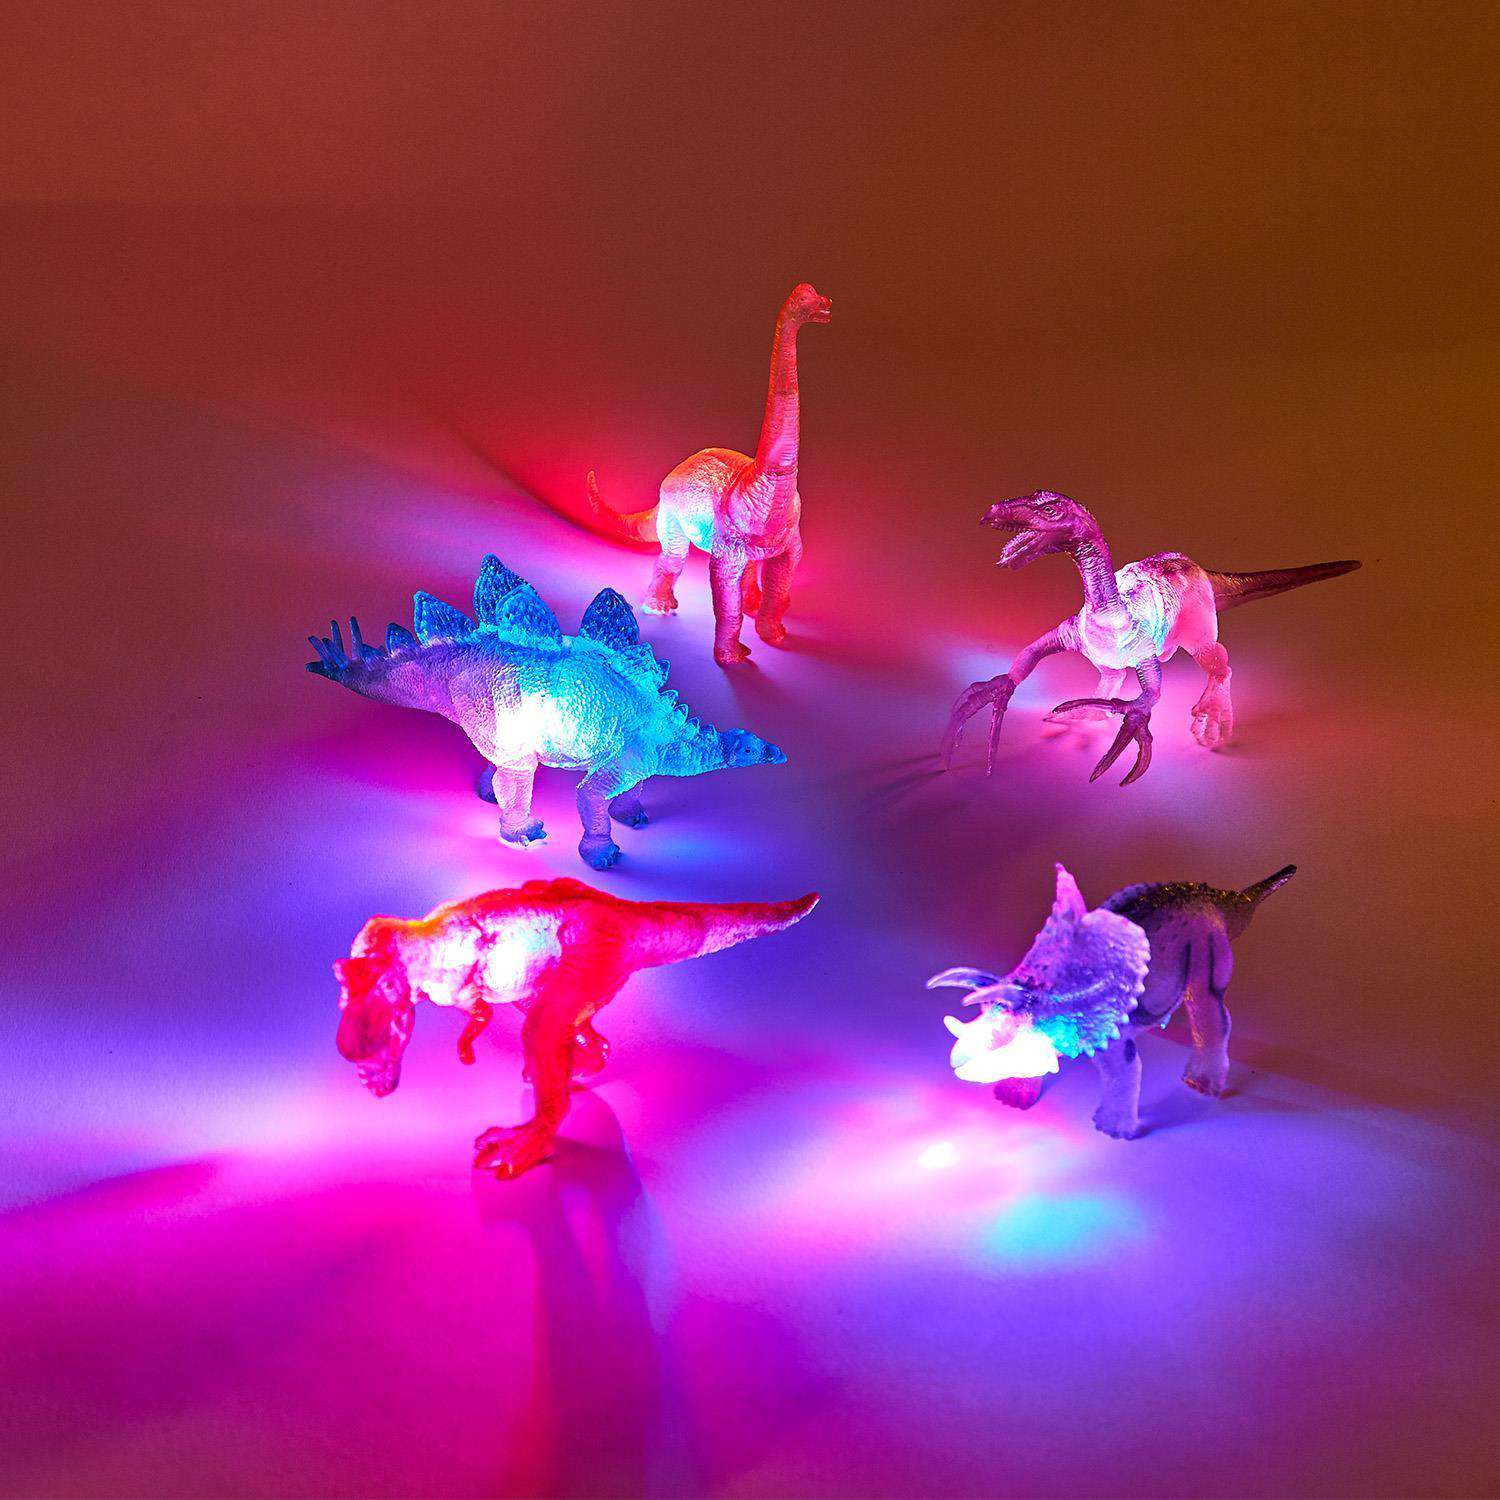 Toys - Dino World Light-up Dinosaurs